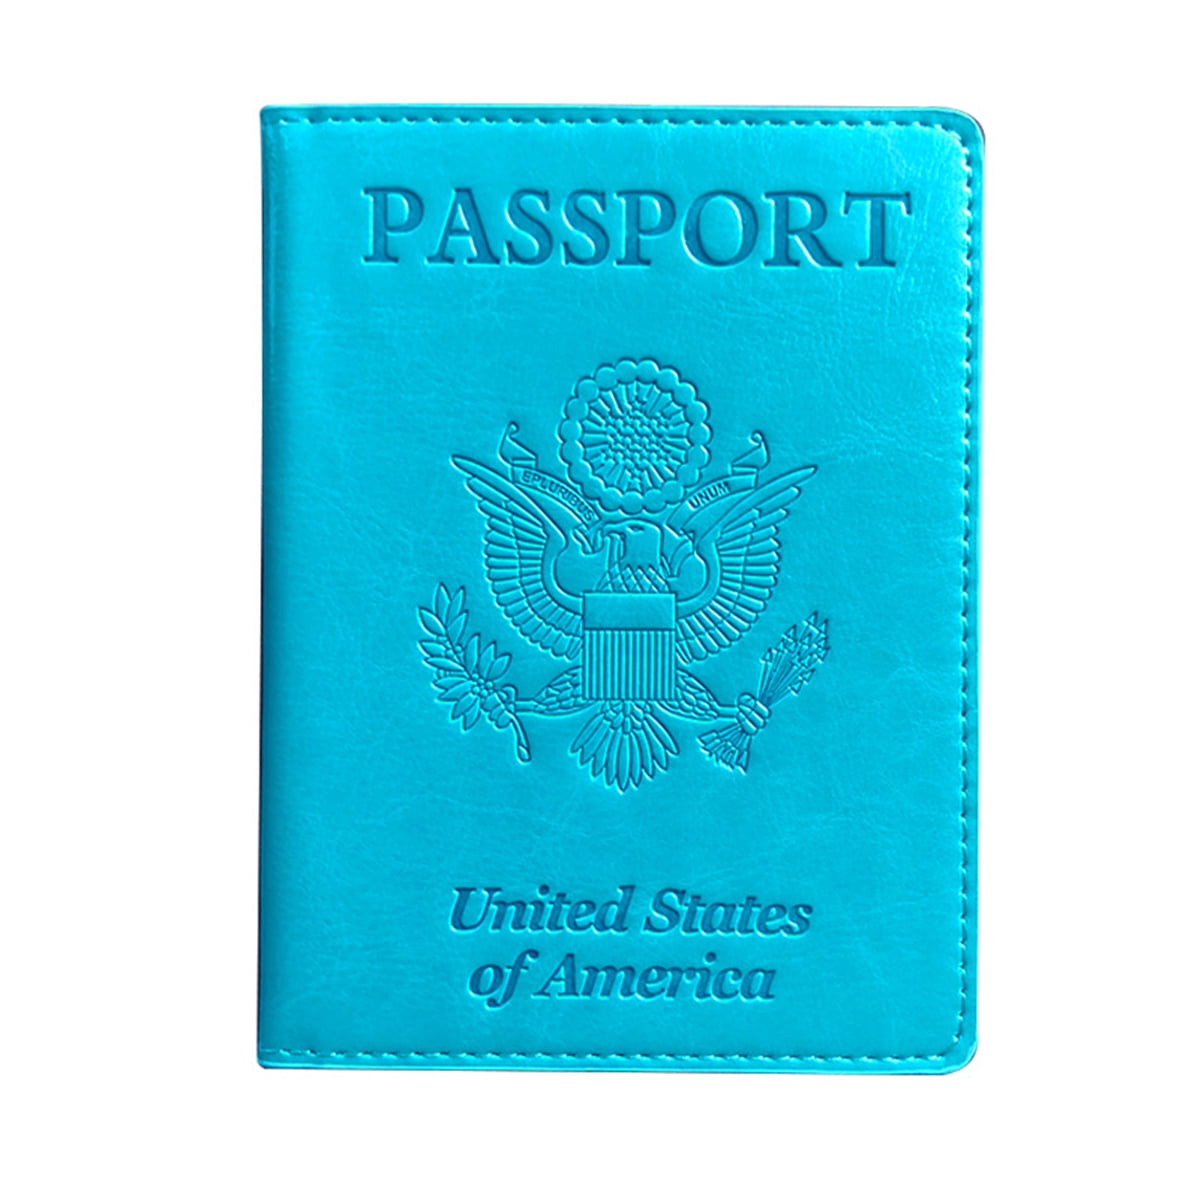 WALNEW Passport and Vaccine Card Holder RFID Blocking Passport Holder Cover Case with Vaccine Card Slot B-Darkbluegreen 